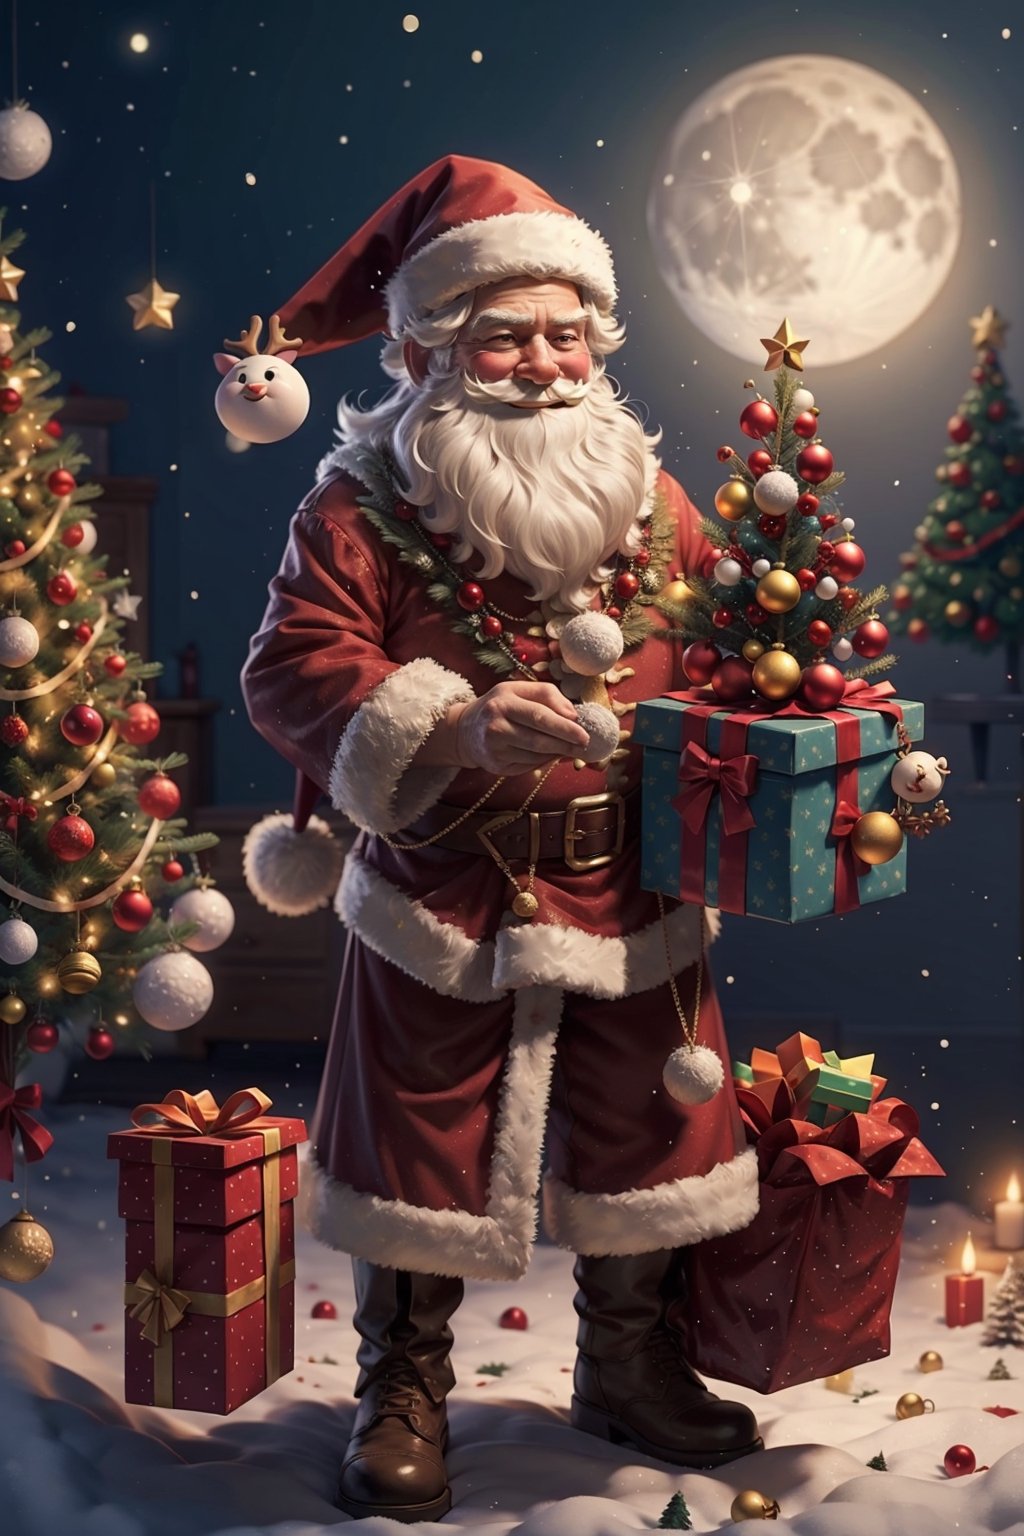 santa claus, portrait, full_body, santa costume, wizard, candy cane, food, candy, moon, santa hat, beard, antlers, reindeer, sack, full moon, facial hair, smiling, Christmas tree